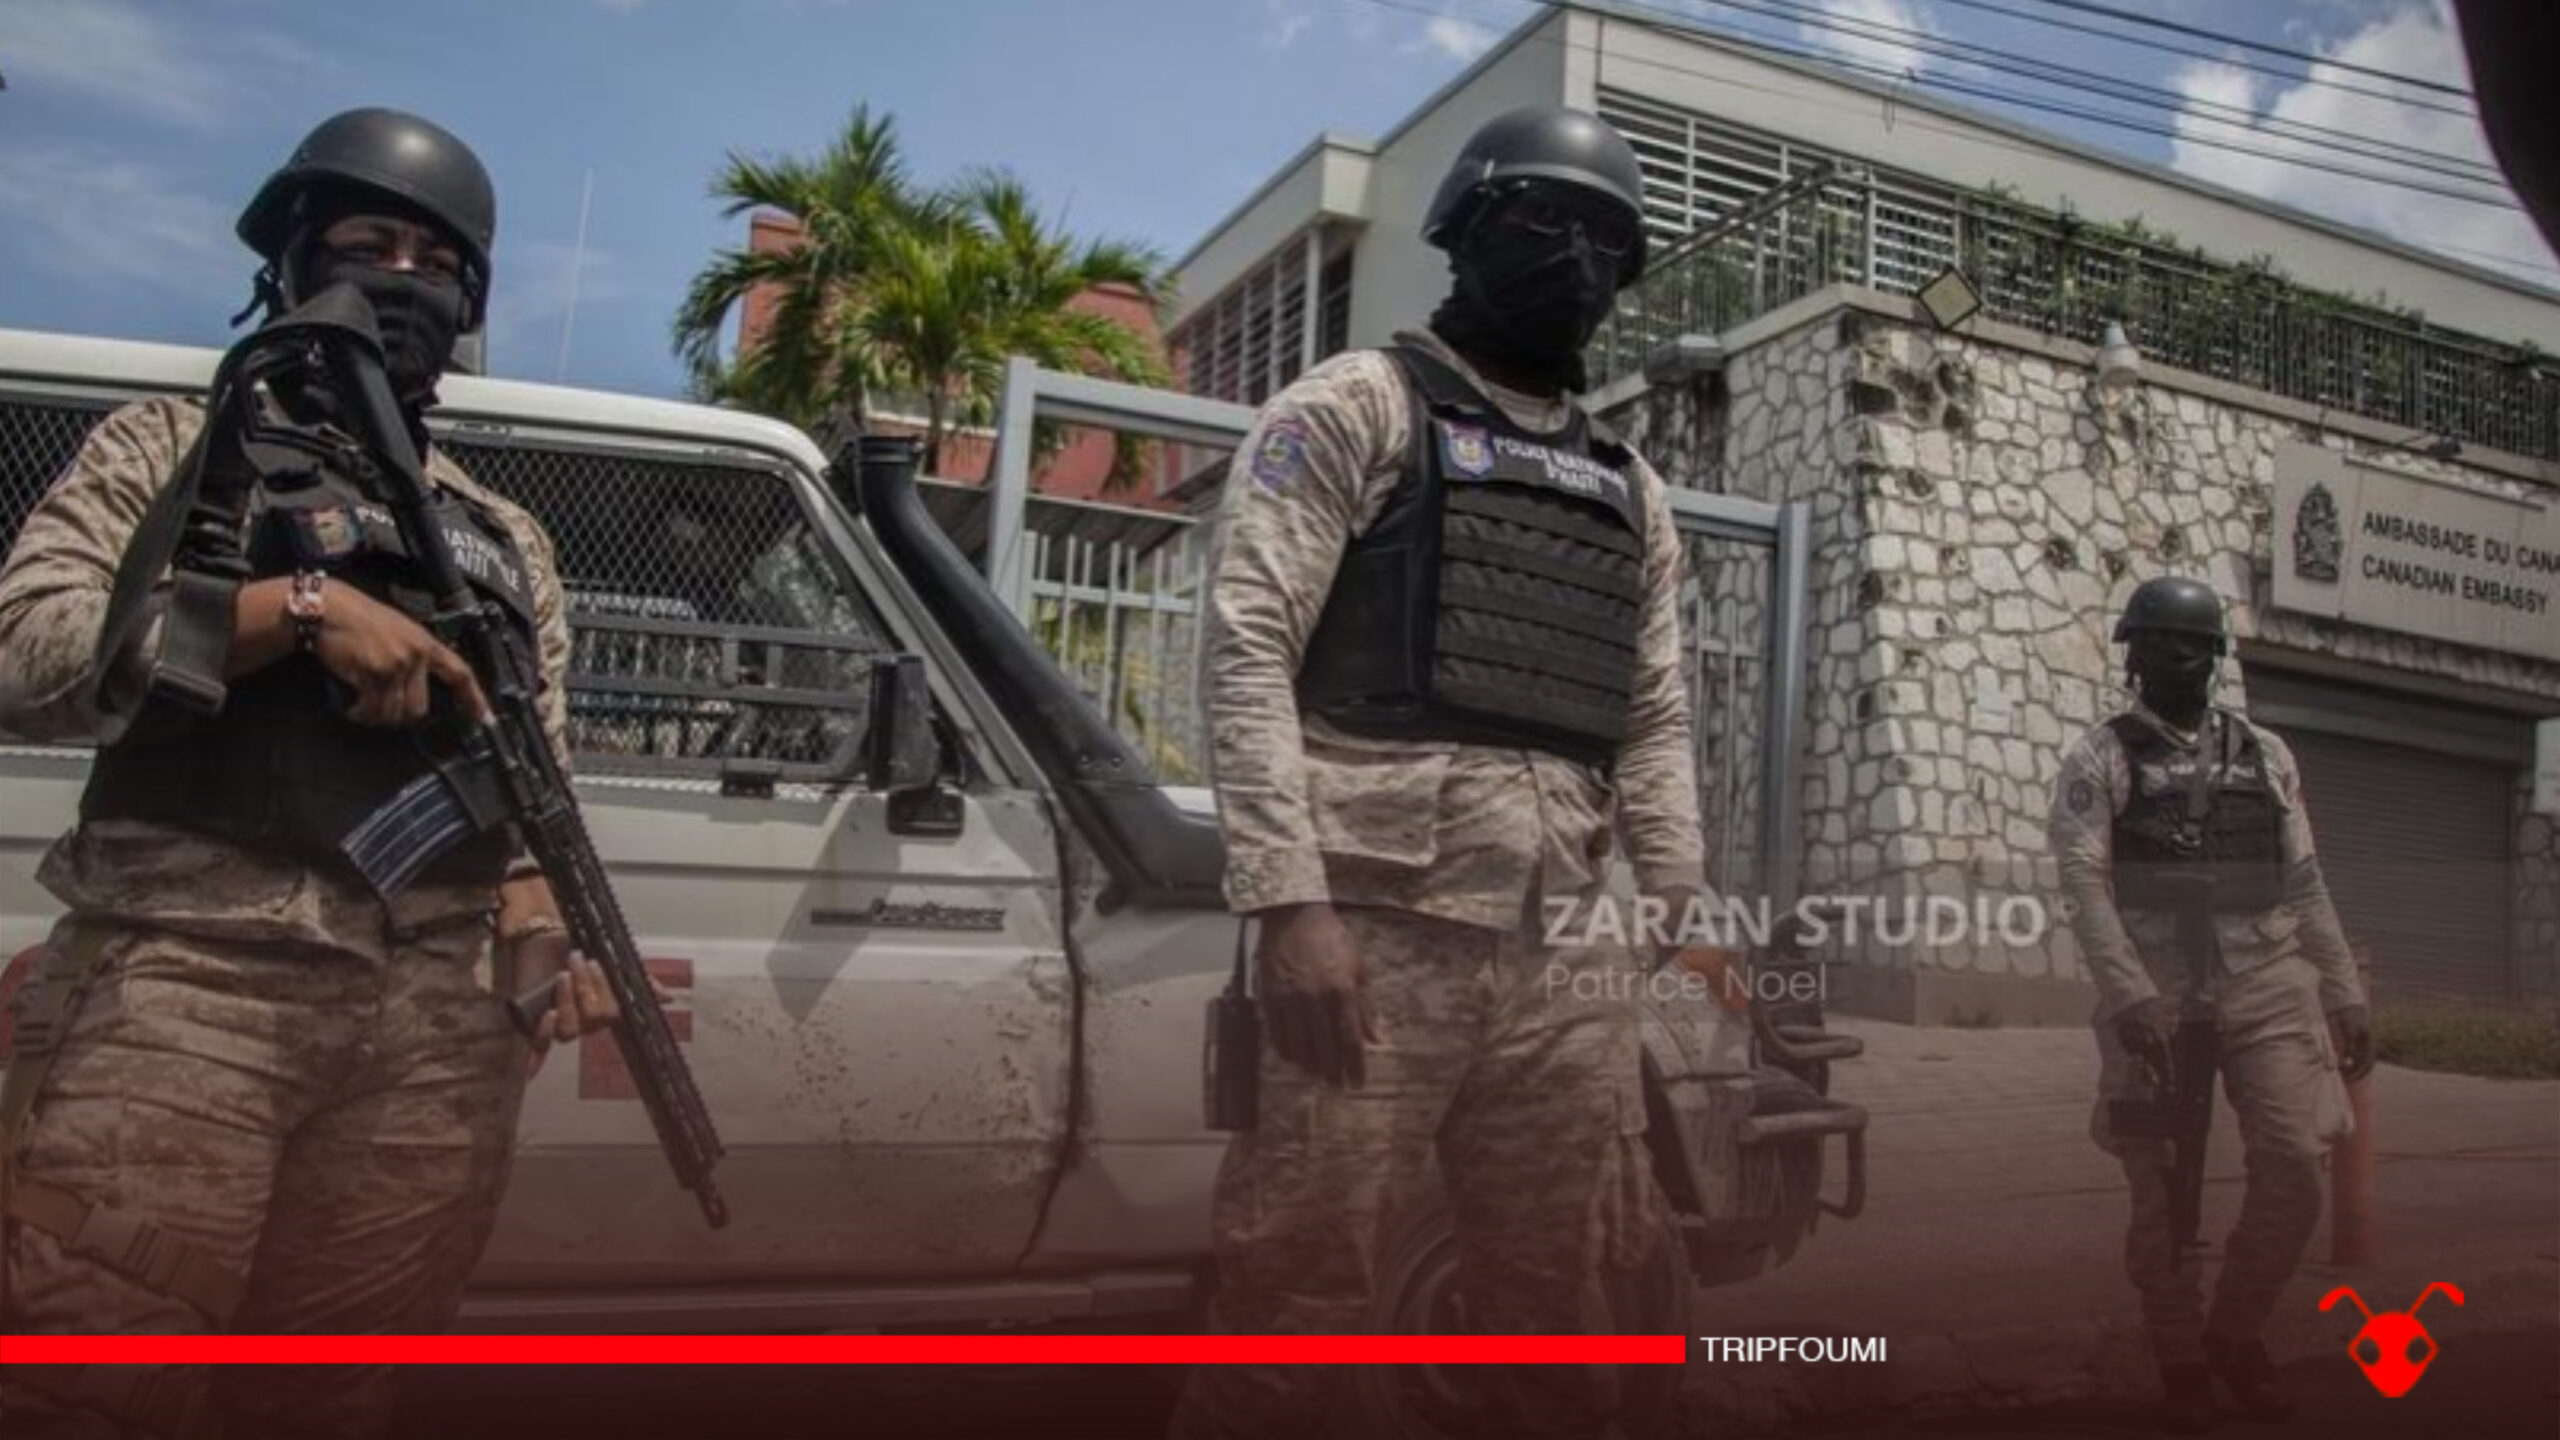 Haïti a besoin de 5.000 policiers internationaux pour contrecarrer les gangs armés, selon un expert de l'ONU